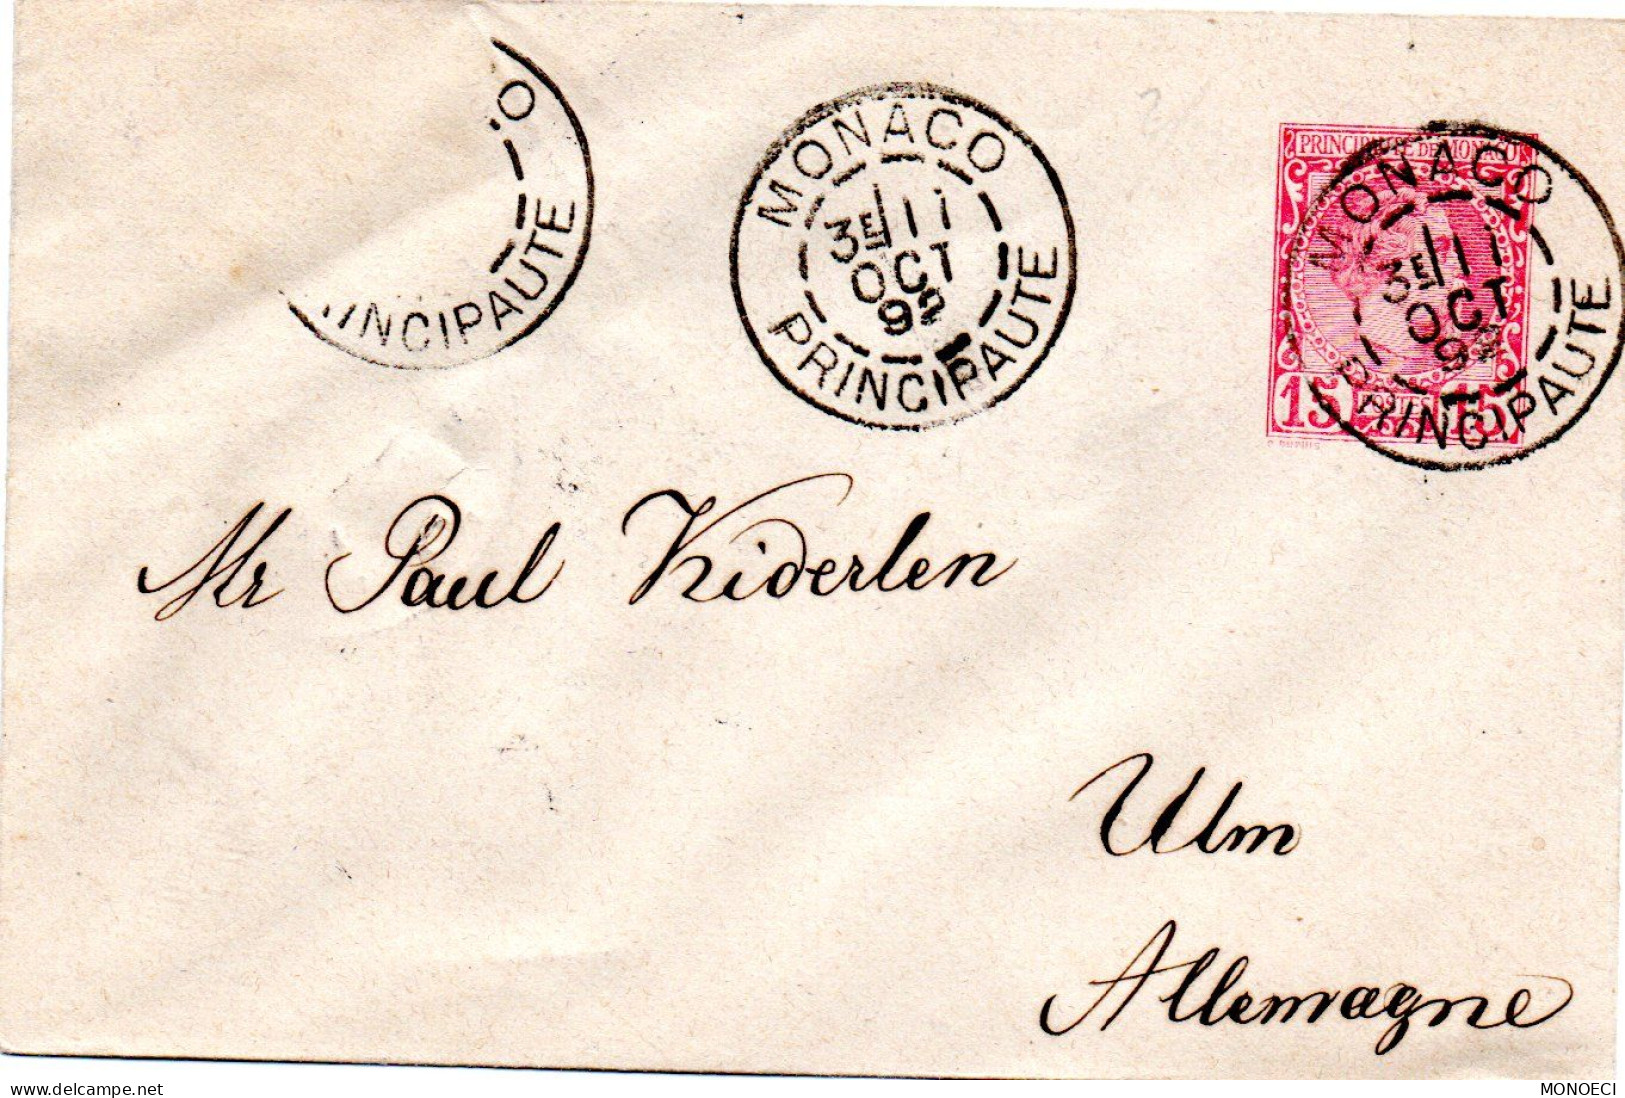 MONACO -- MONTE CARLO -- Entier Postal -- Enveloppe 15 C. Carmin Sur Blanc 1886 (116 X 76) - Postal Stationery